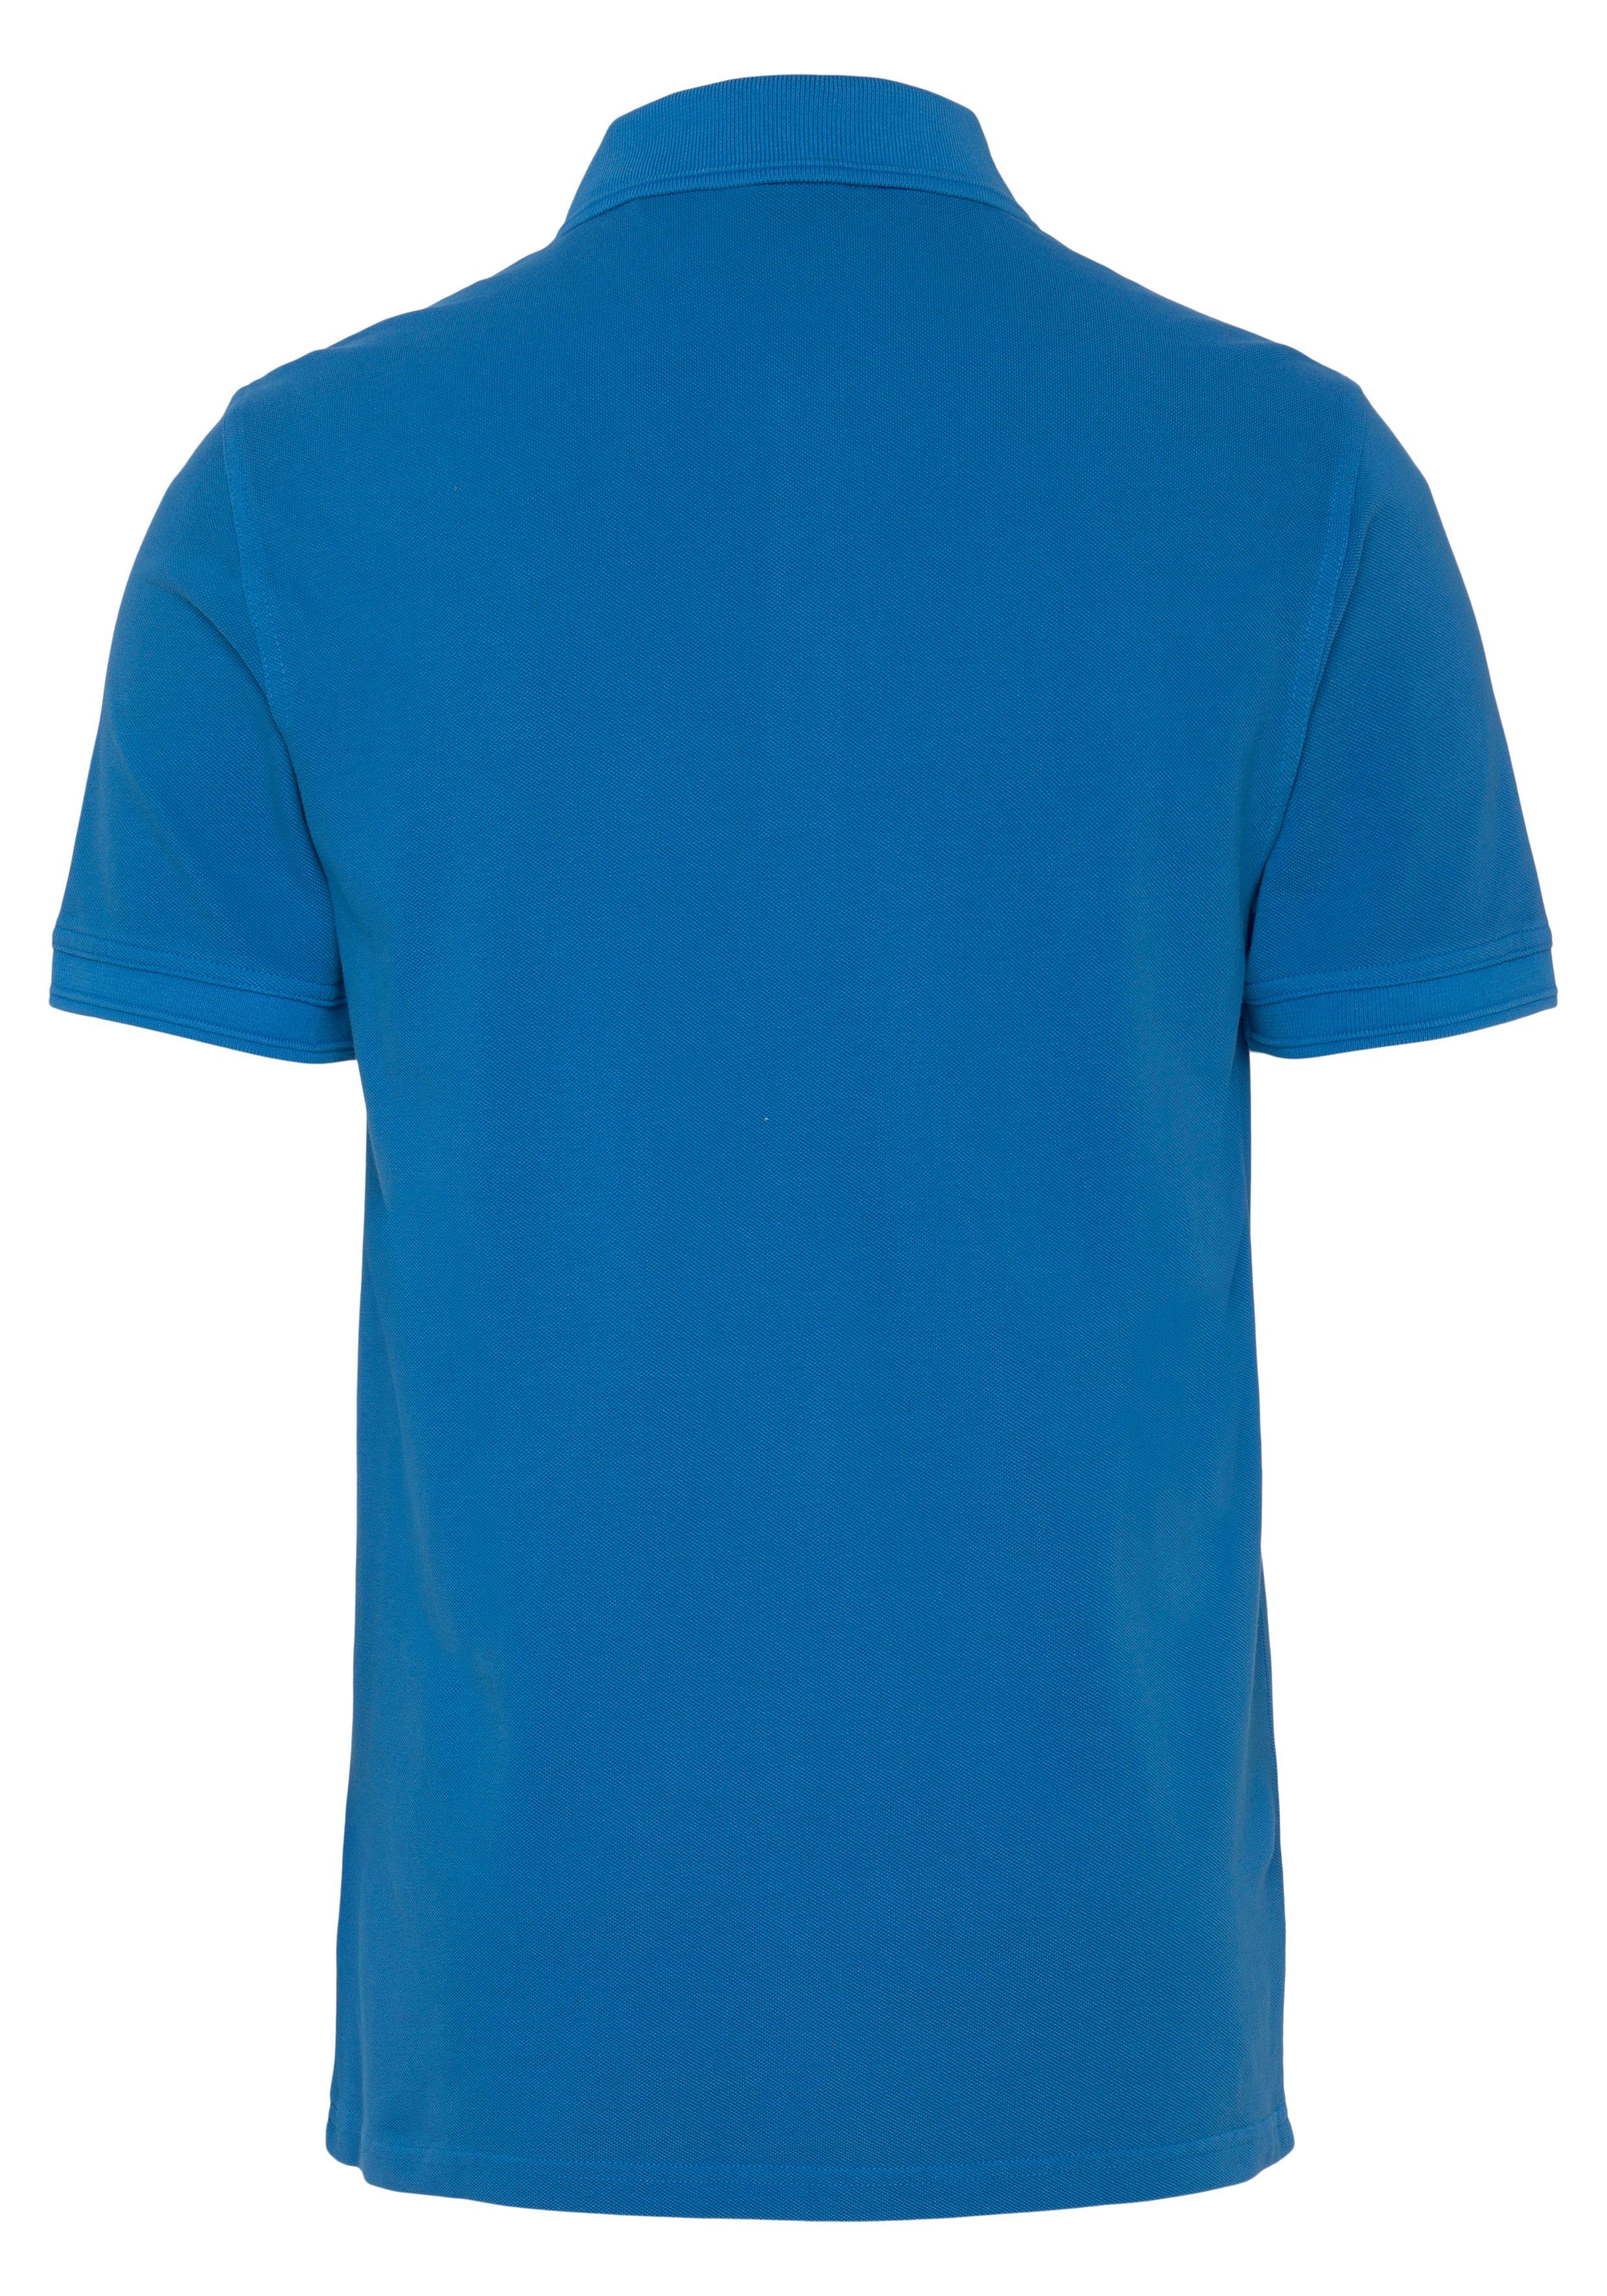 BOSS ORANGE Poloshirt mit Prime dezentem Brust der Open_Blue1 01 10203439 Logoschriftzug auf